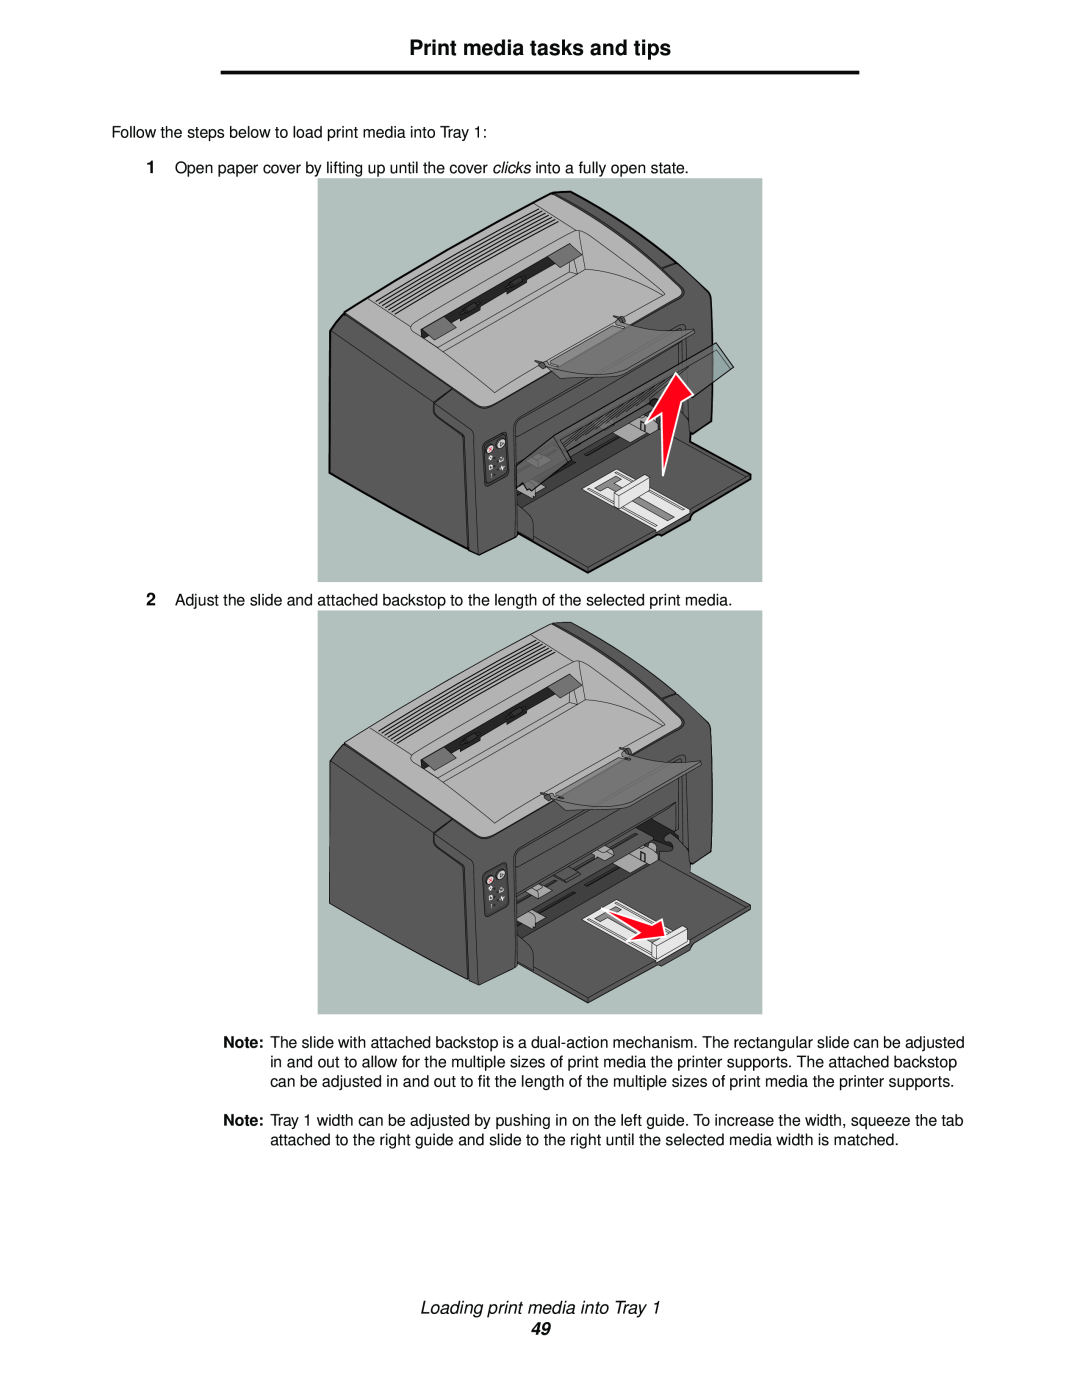 Lexmark 120 manual Loading print media into Tray, Print media tasks and tips 